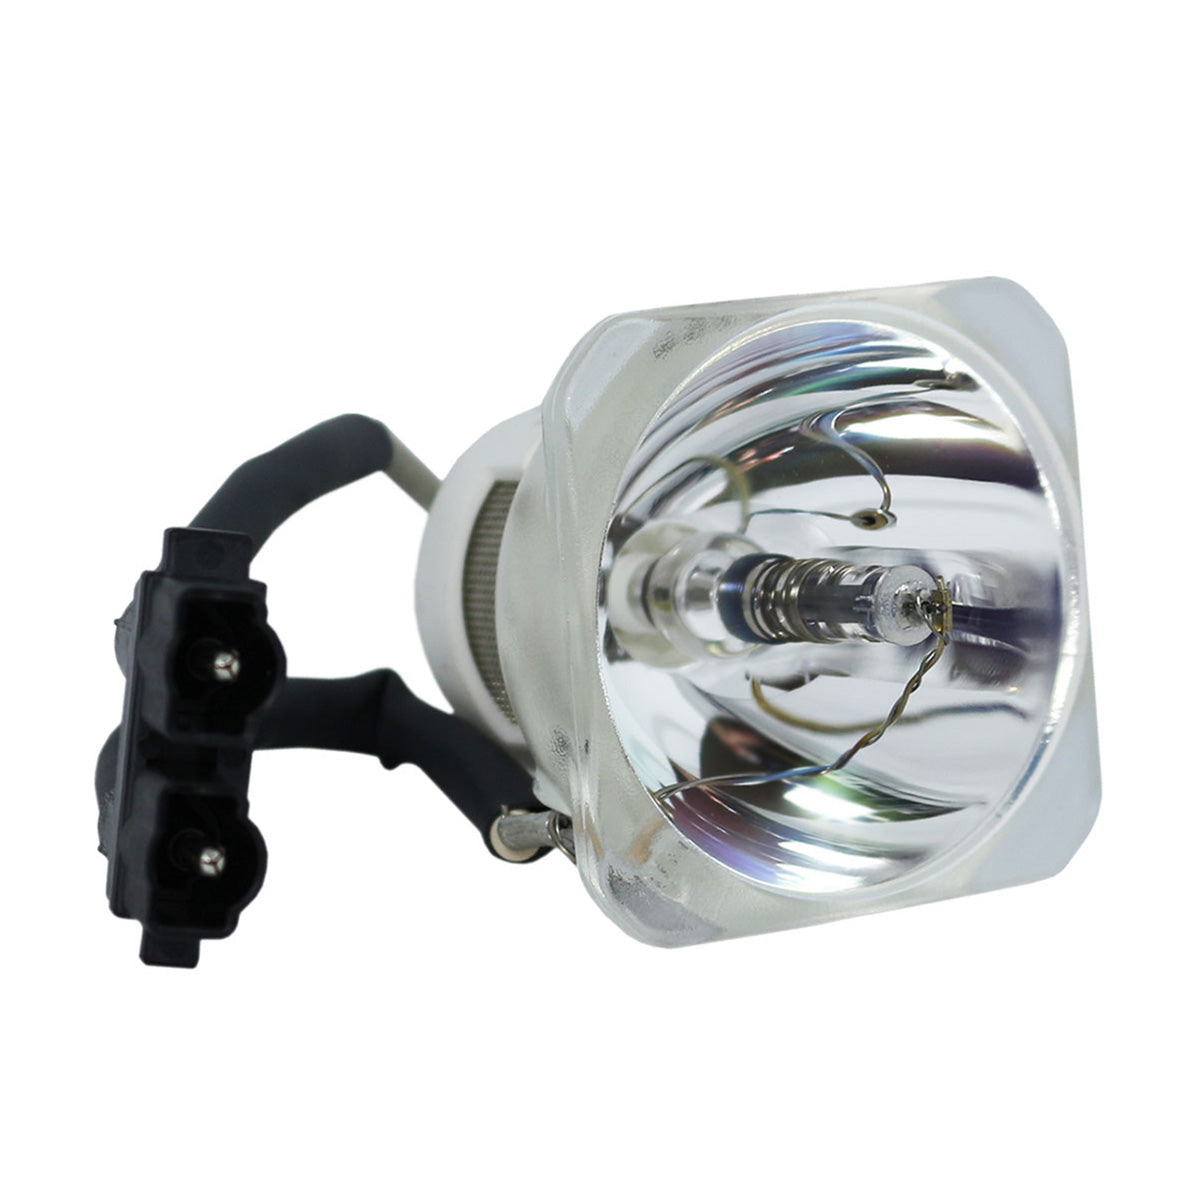 Liesegang 310-6472 Ushio Projector Bare Lamp